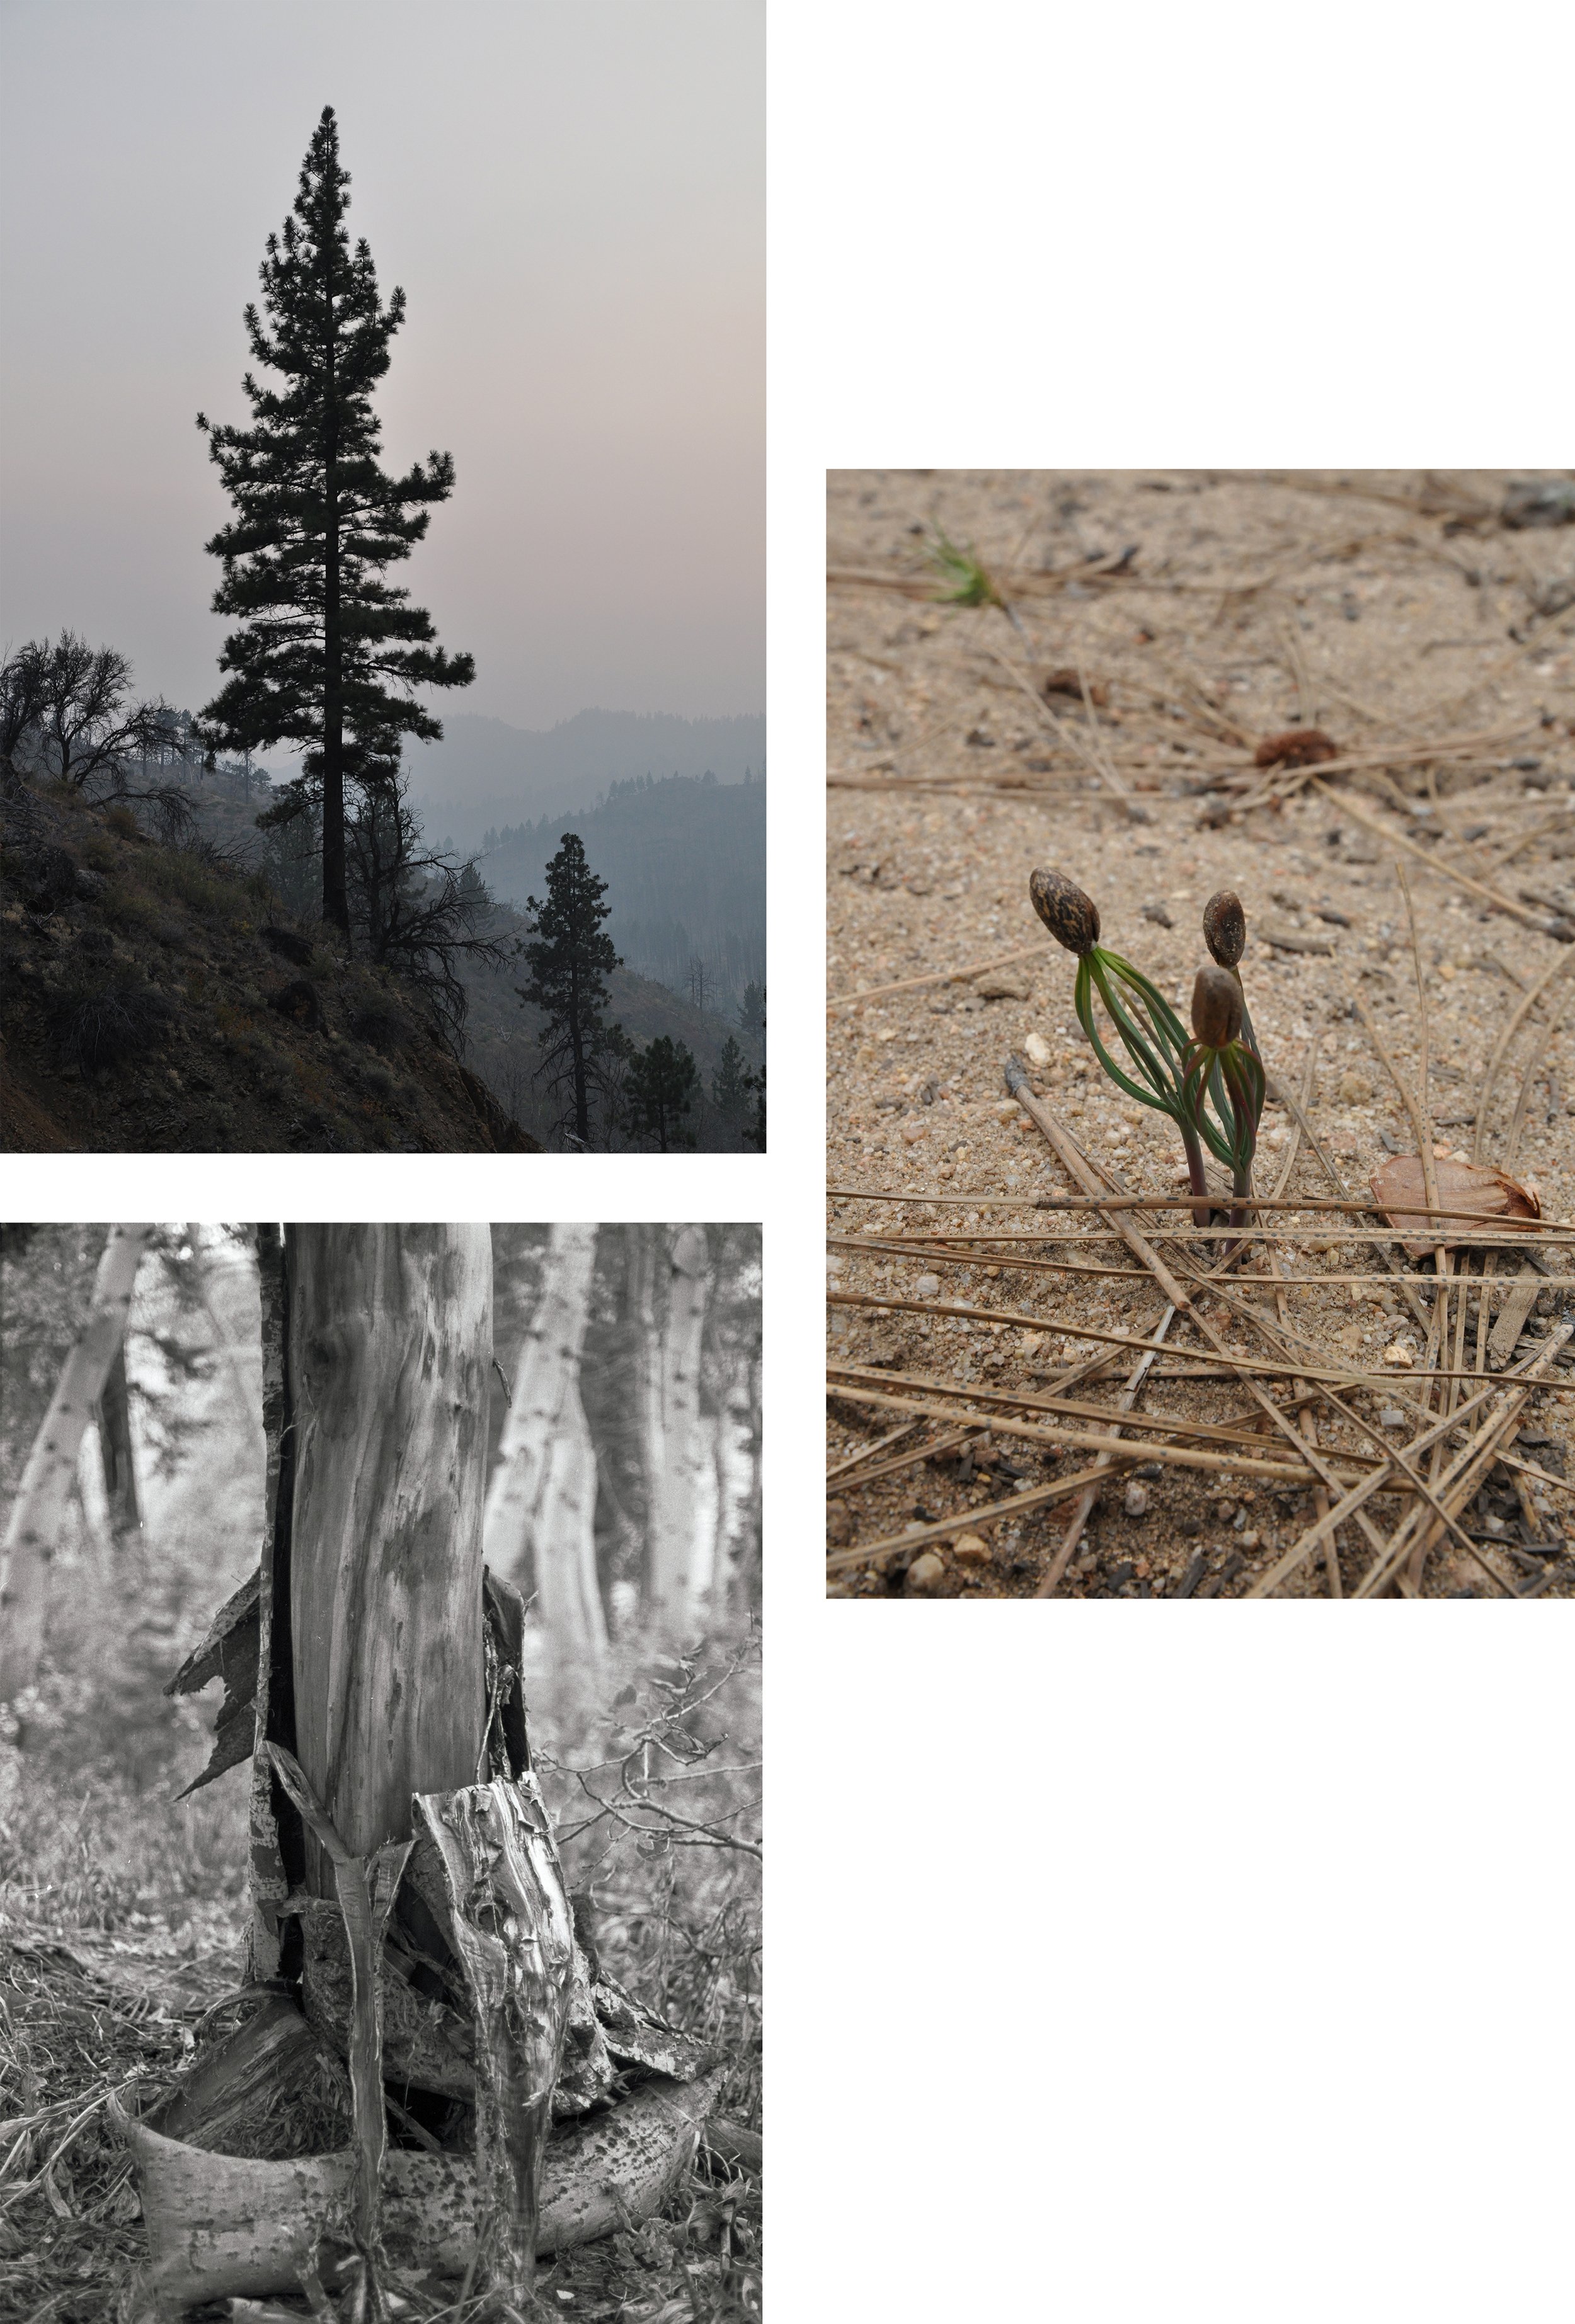   Pine Tree in Smoke, Aspen Shedding, Pine Seeds Sprouting.  Sierra Nevadas, CA. 2020/21. 